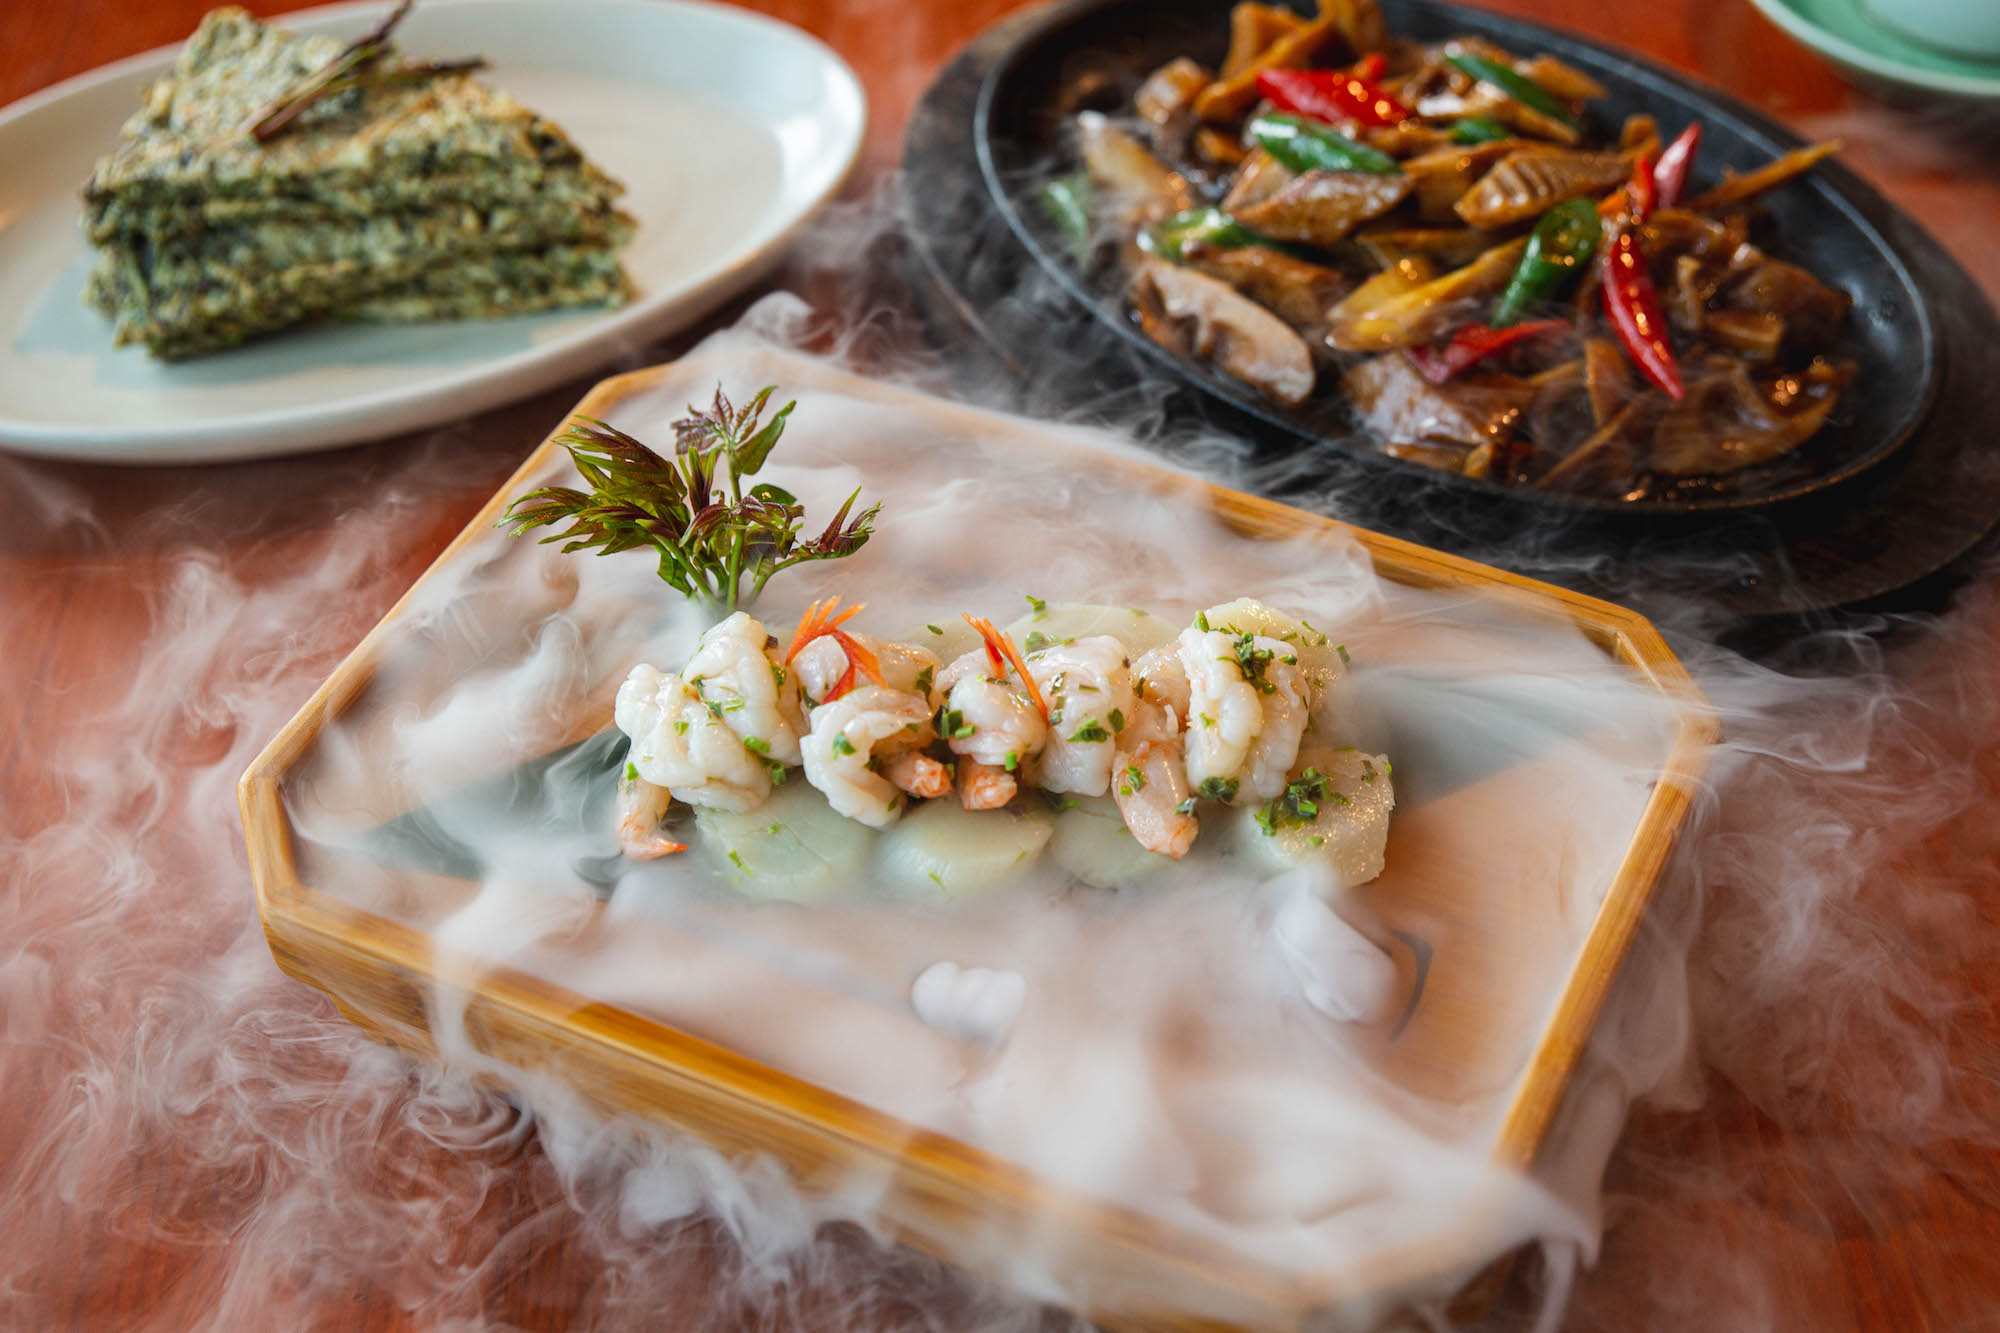 Beijing Kitchen at Grand Hyatt Seasonal Spring Menu Shrimps Dish, Meat and Omelet Macau Lifestyle